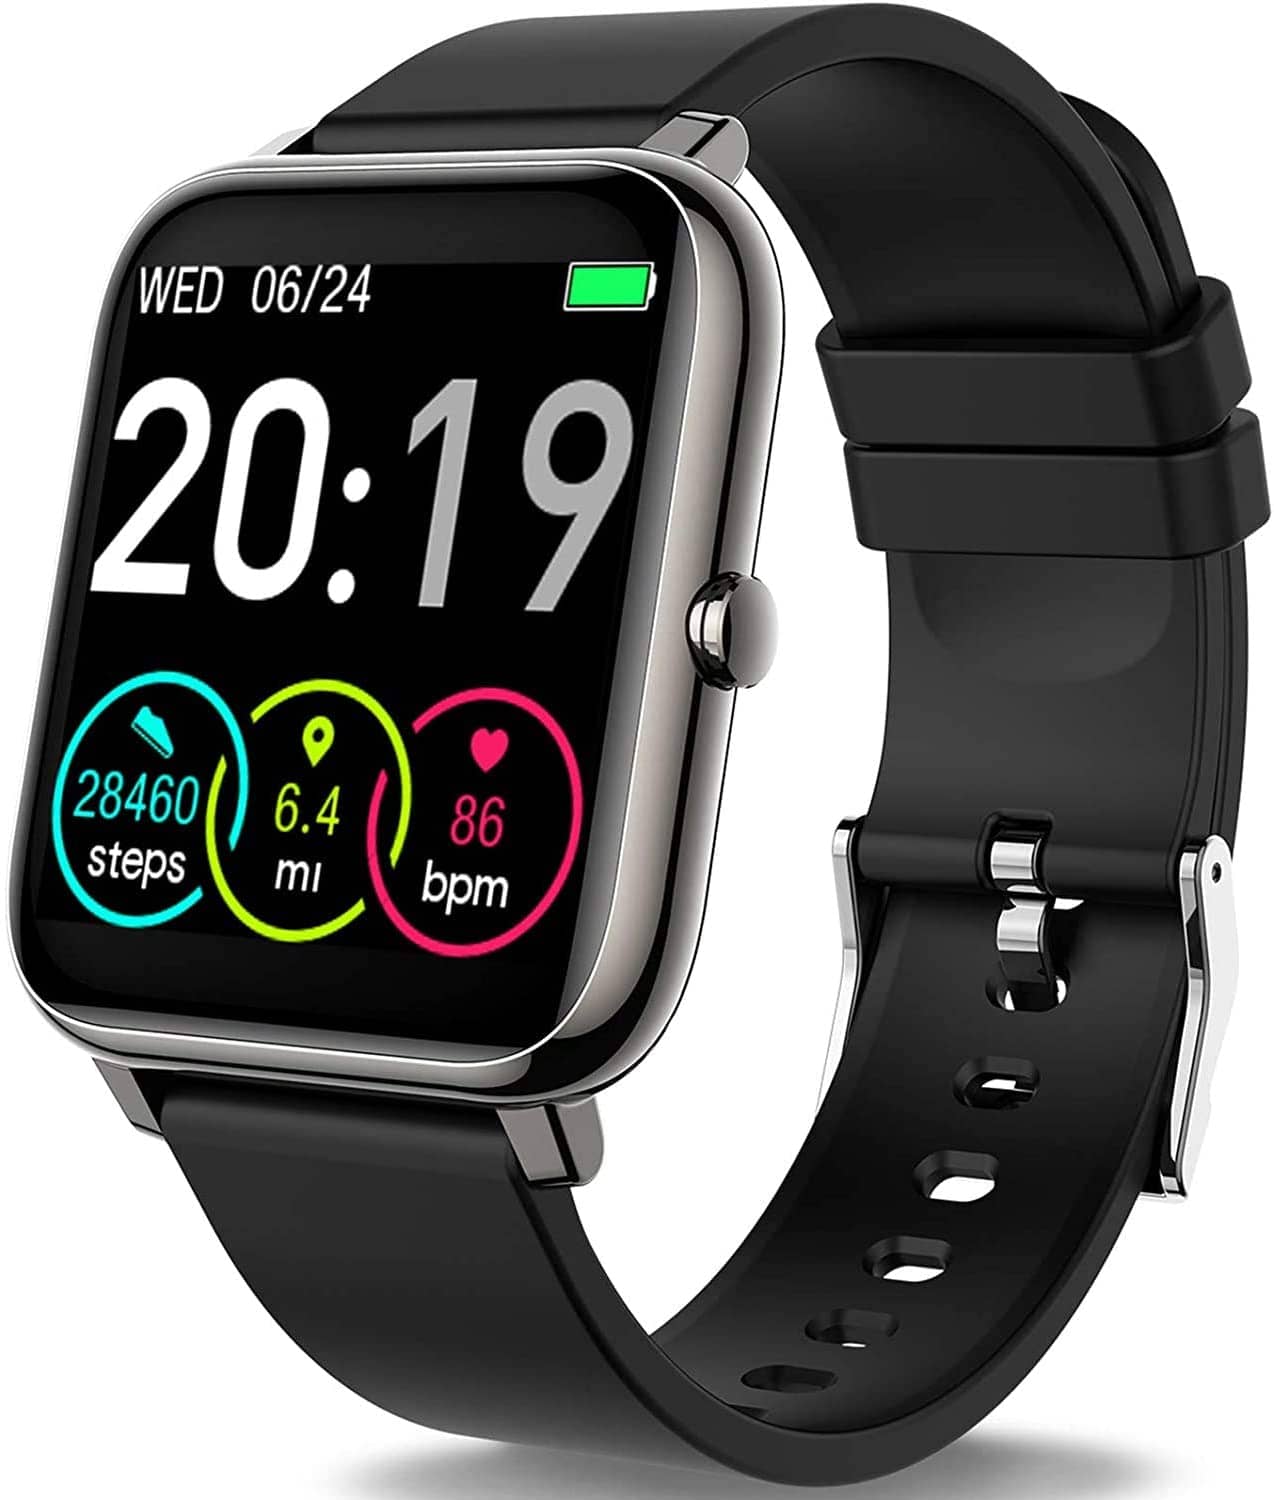 Motast smartwatch